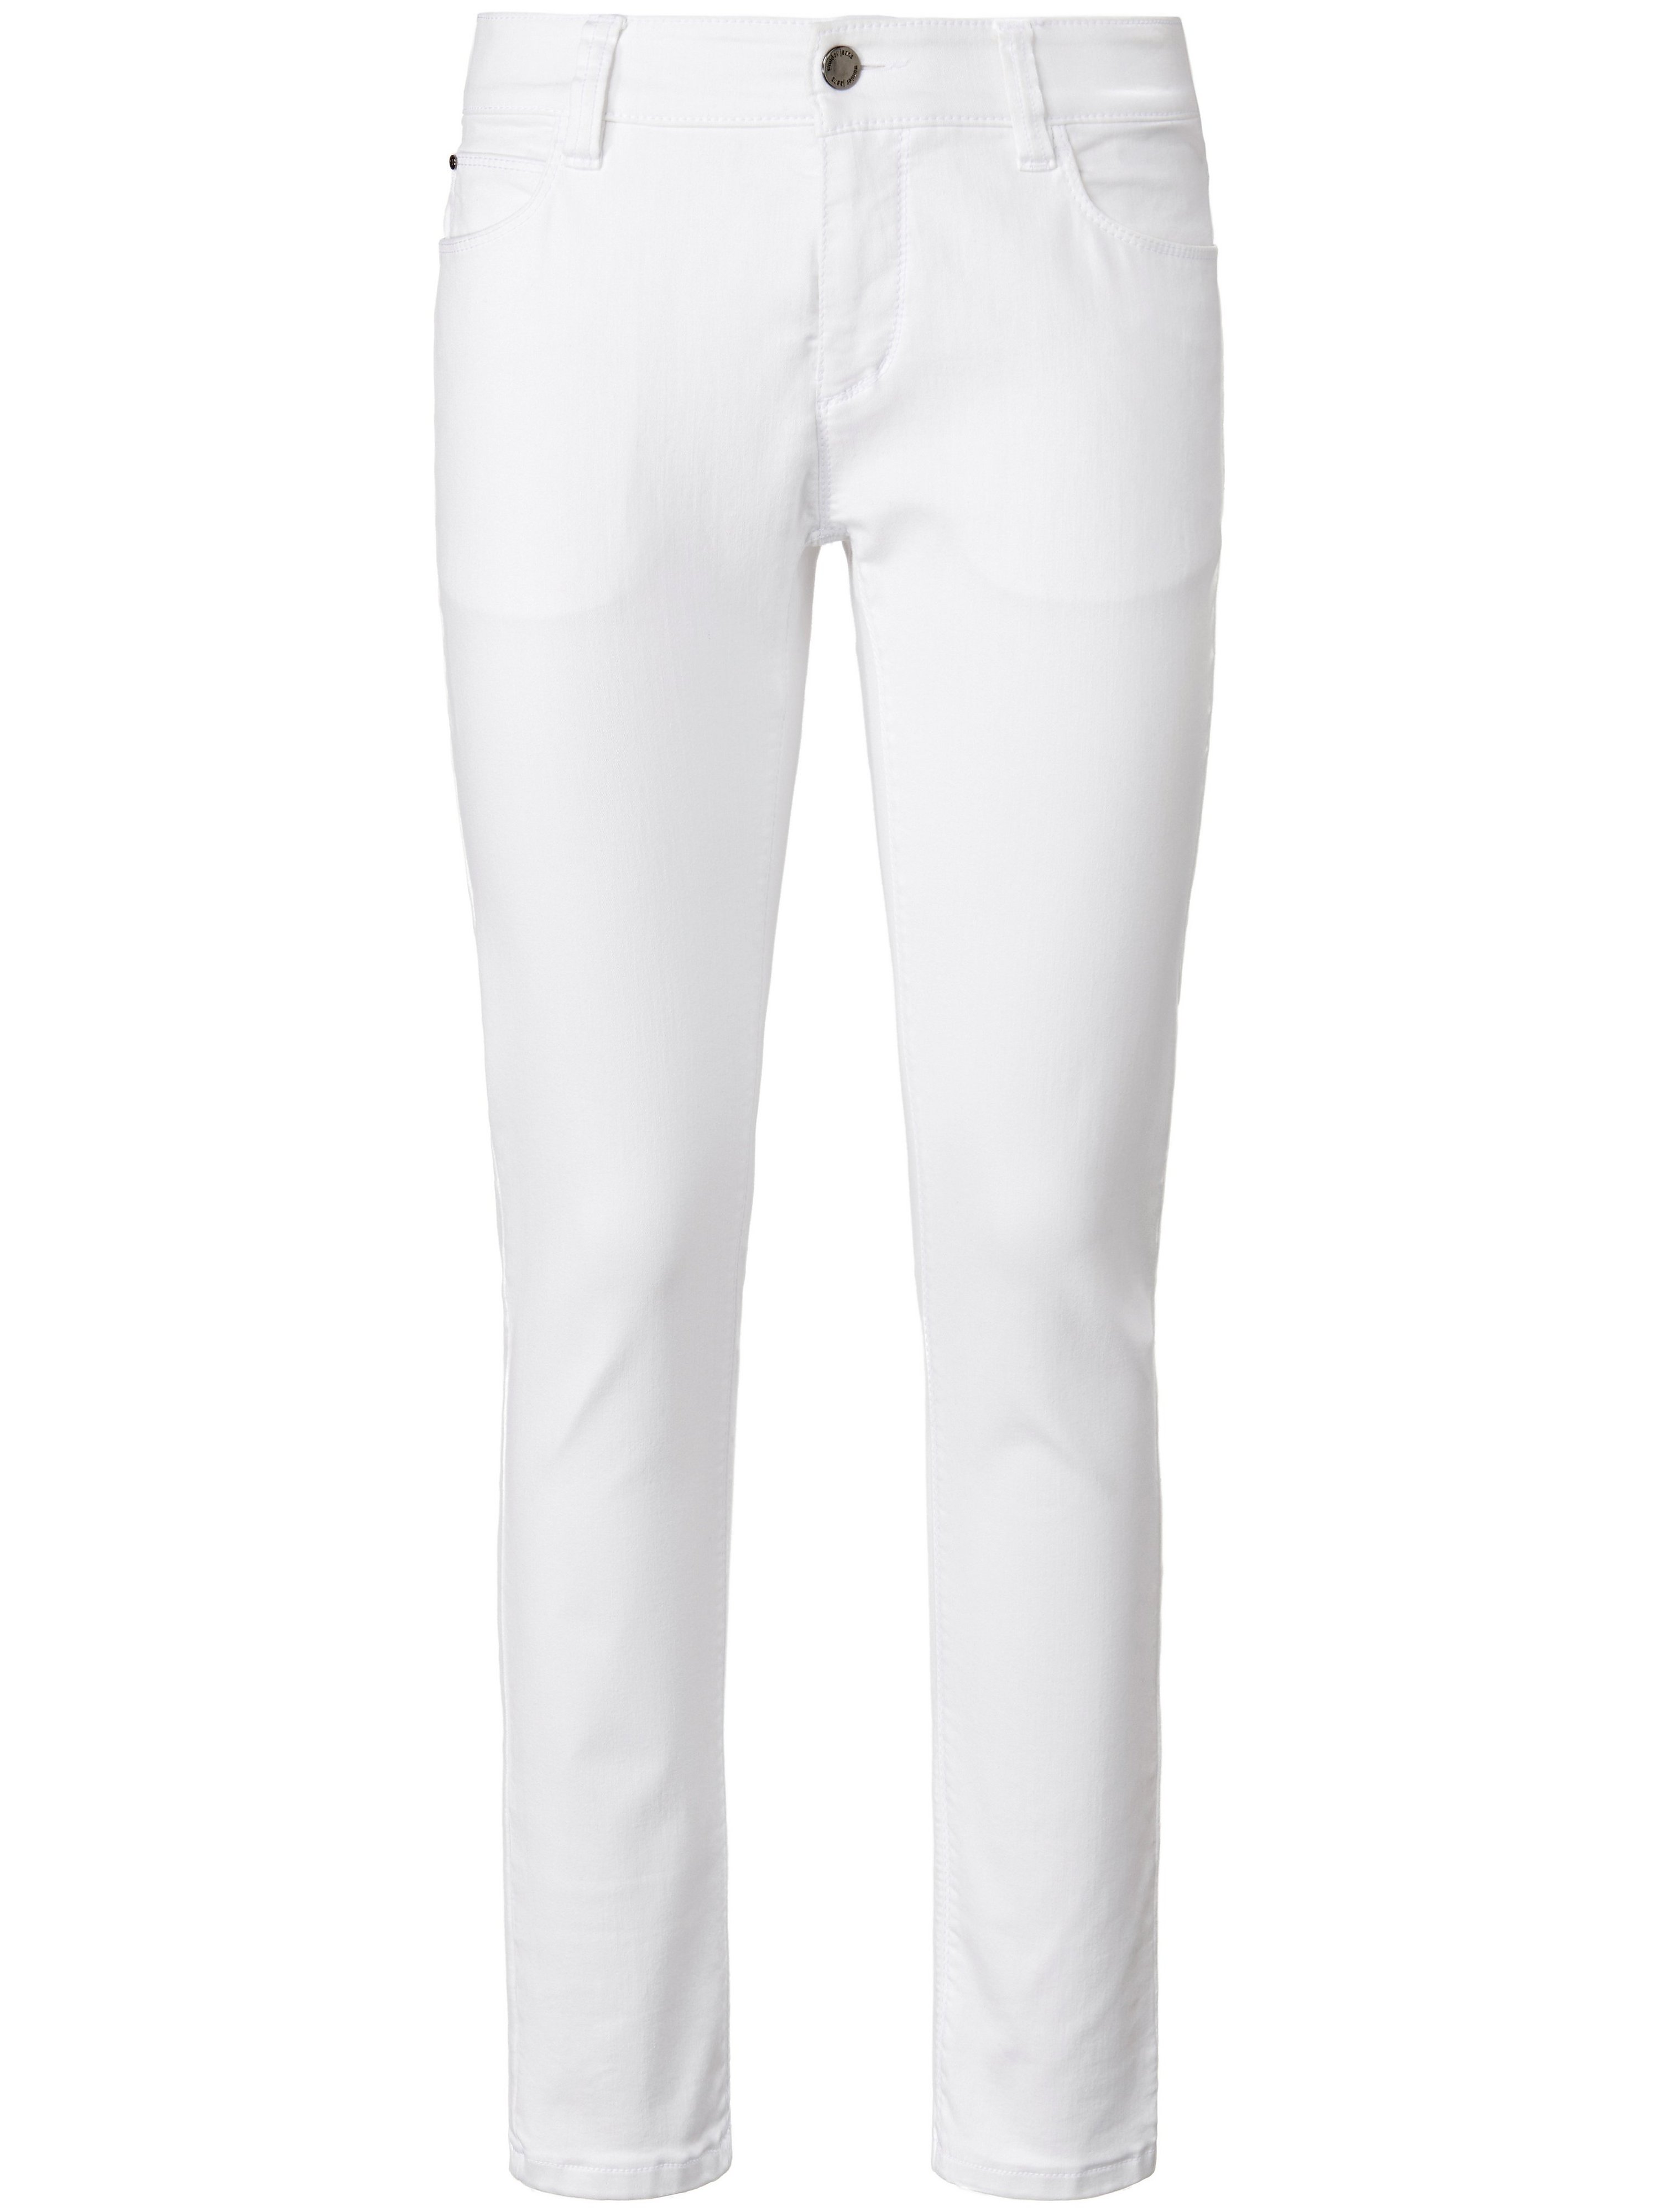 Le jean Wonderjeans 5 poches  Looxent blanc taille 42